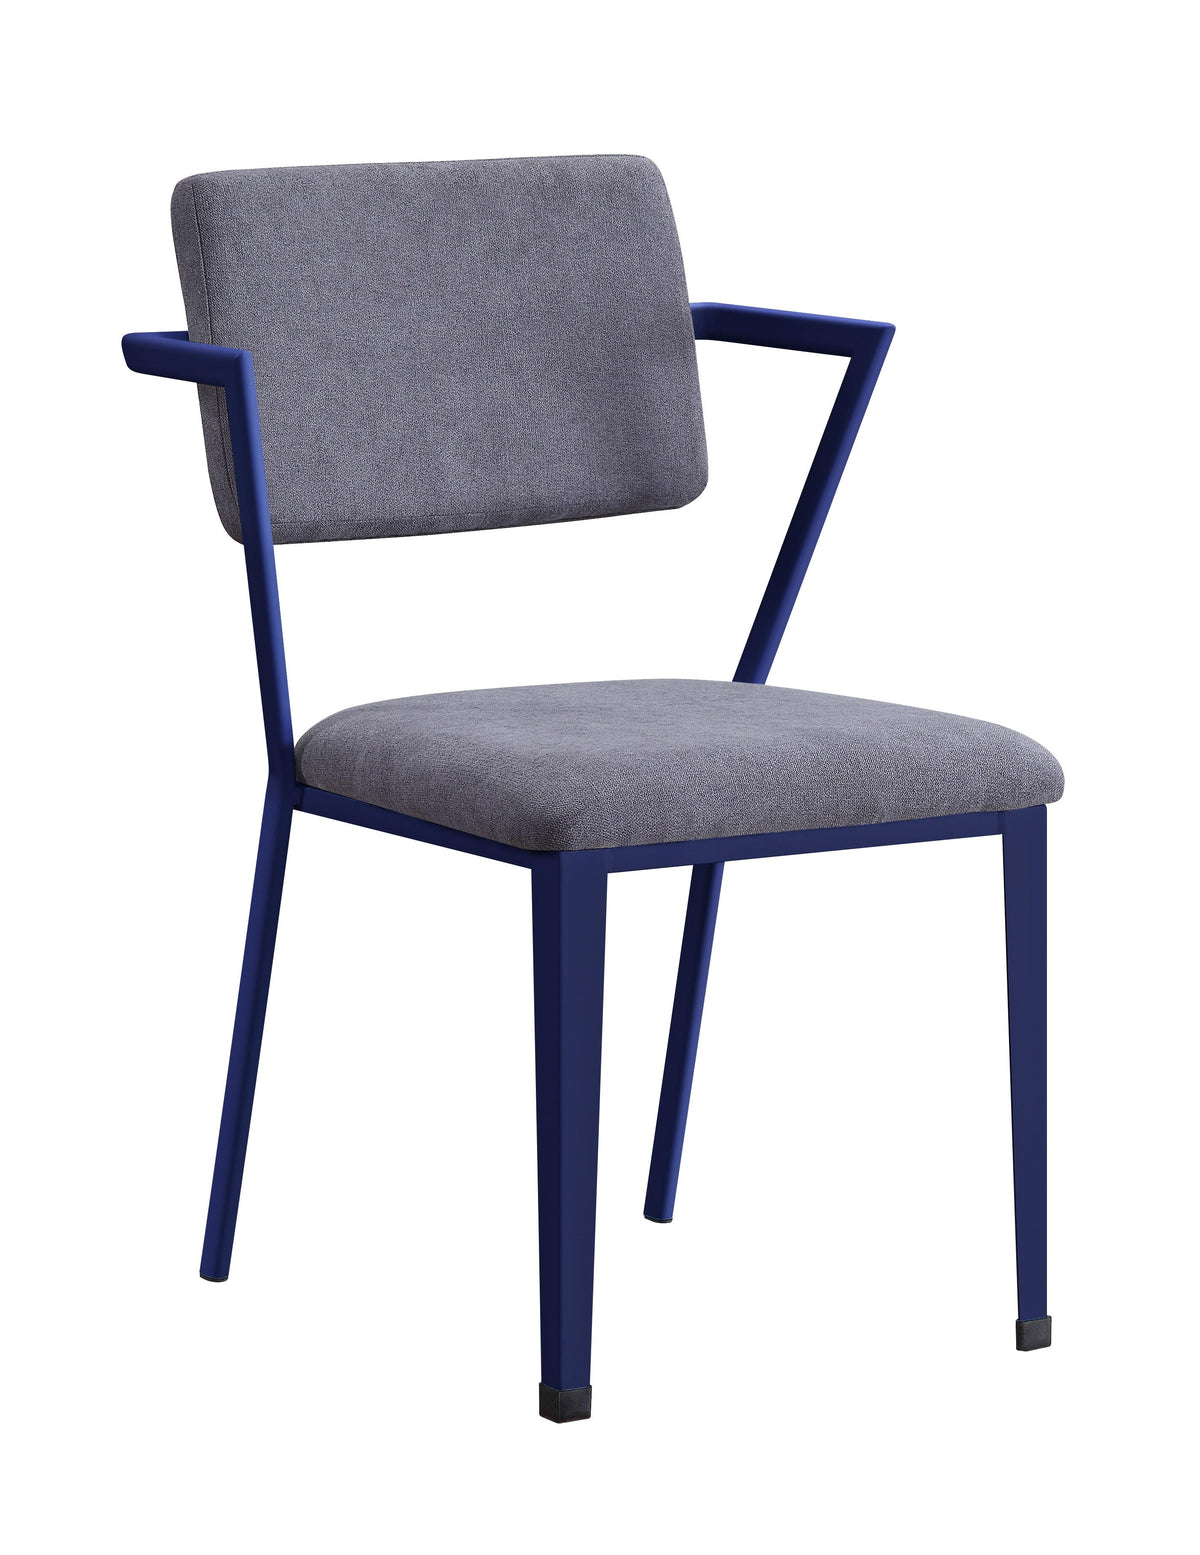 Cargo Gray Fabric & Blue Chair  Half Price Furniture